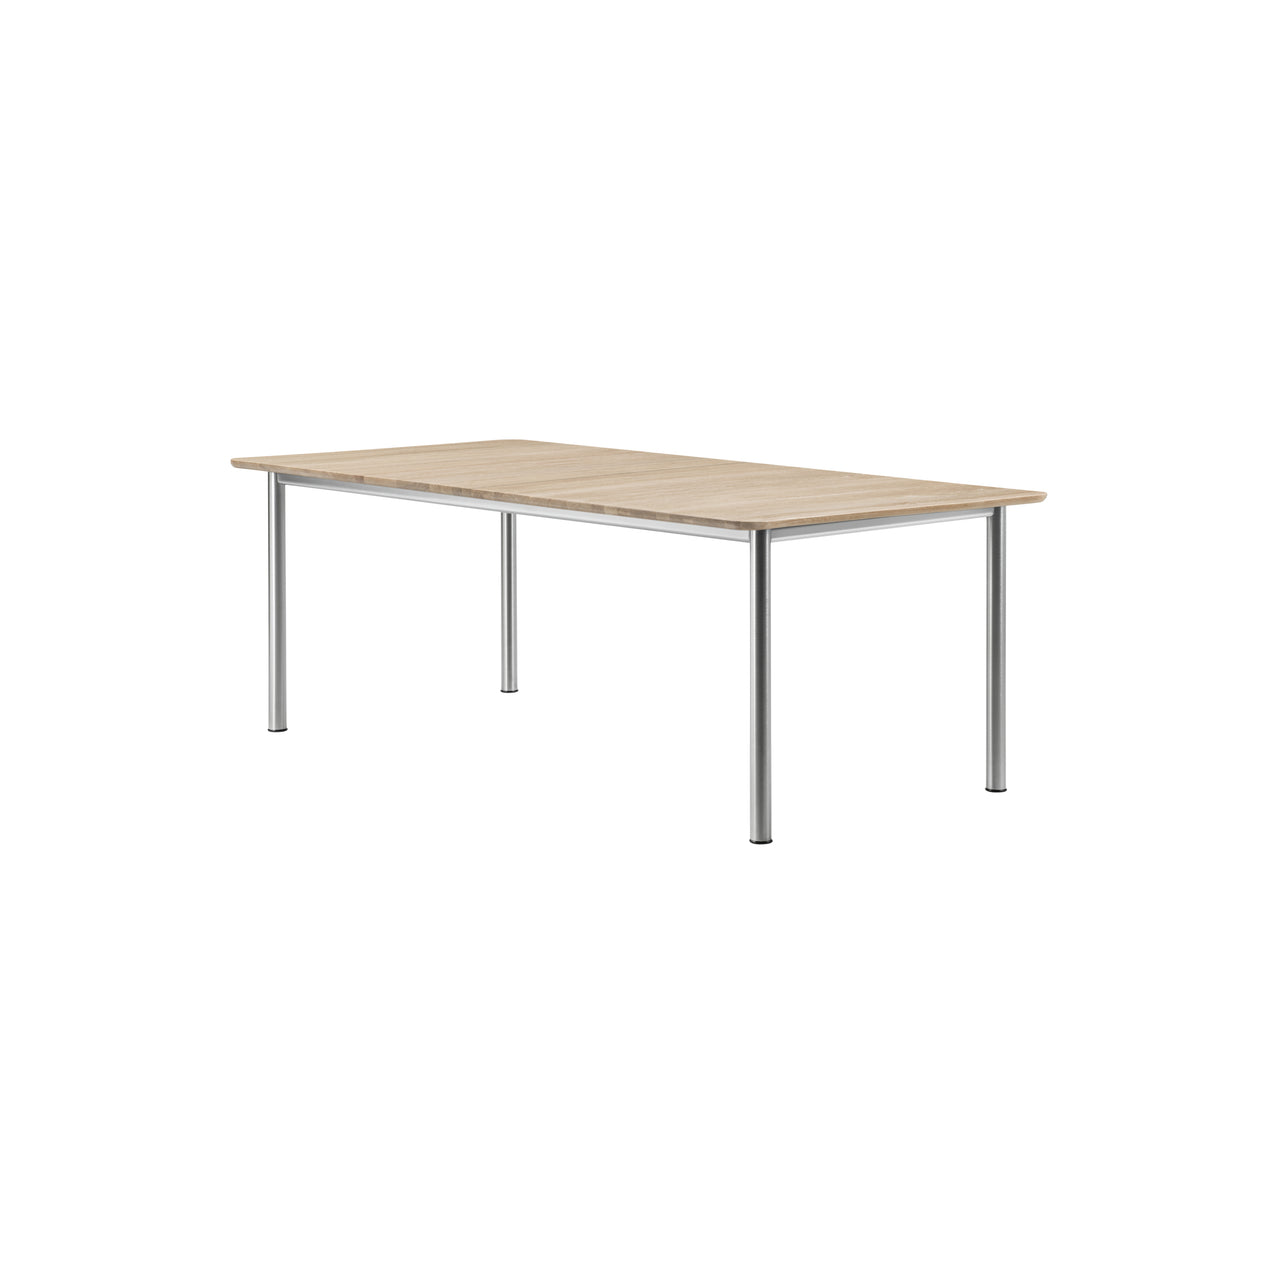 Plan Extendable Table: Light Oiled Oak + Brushed Steel